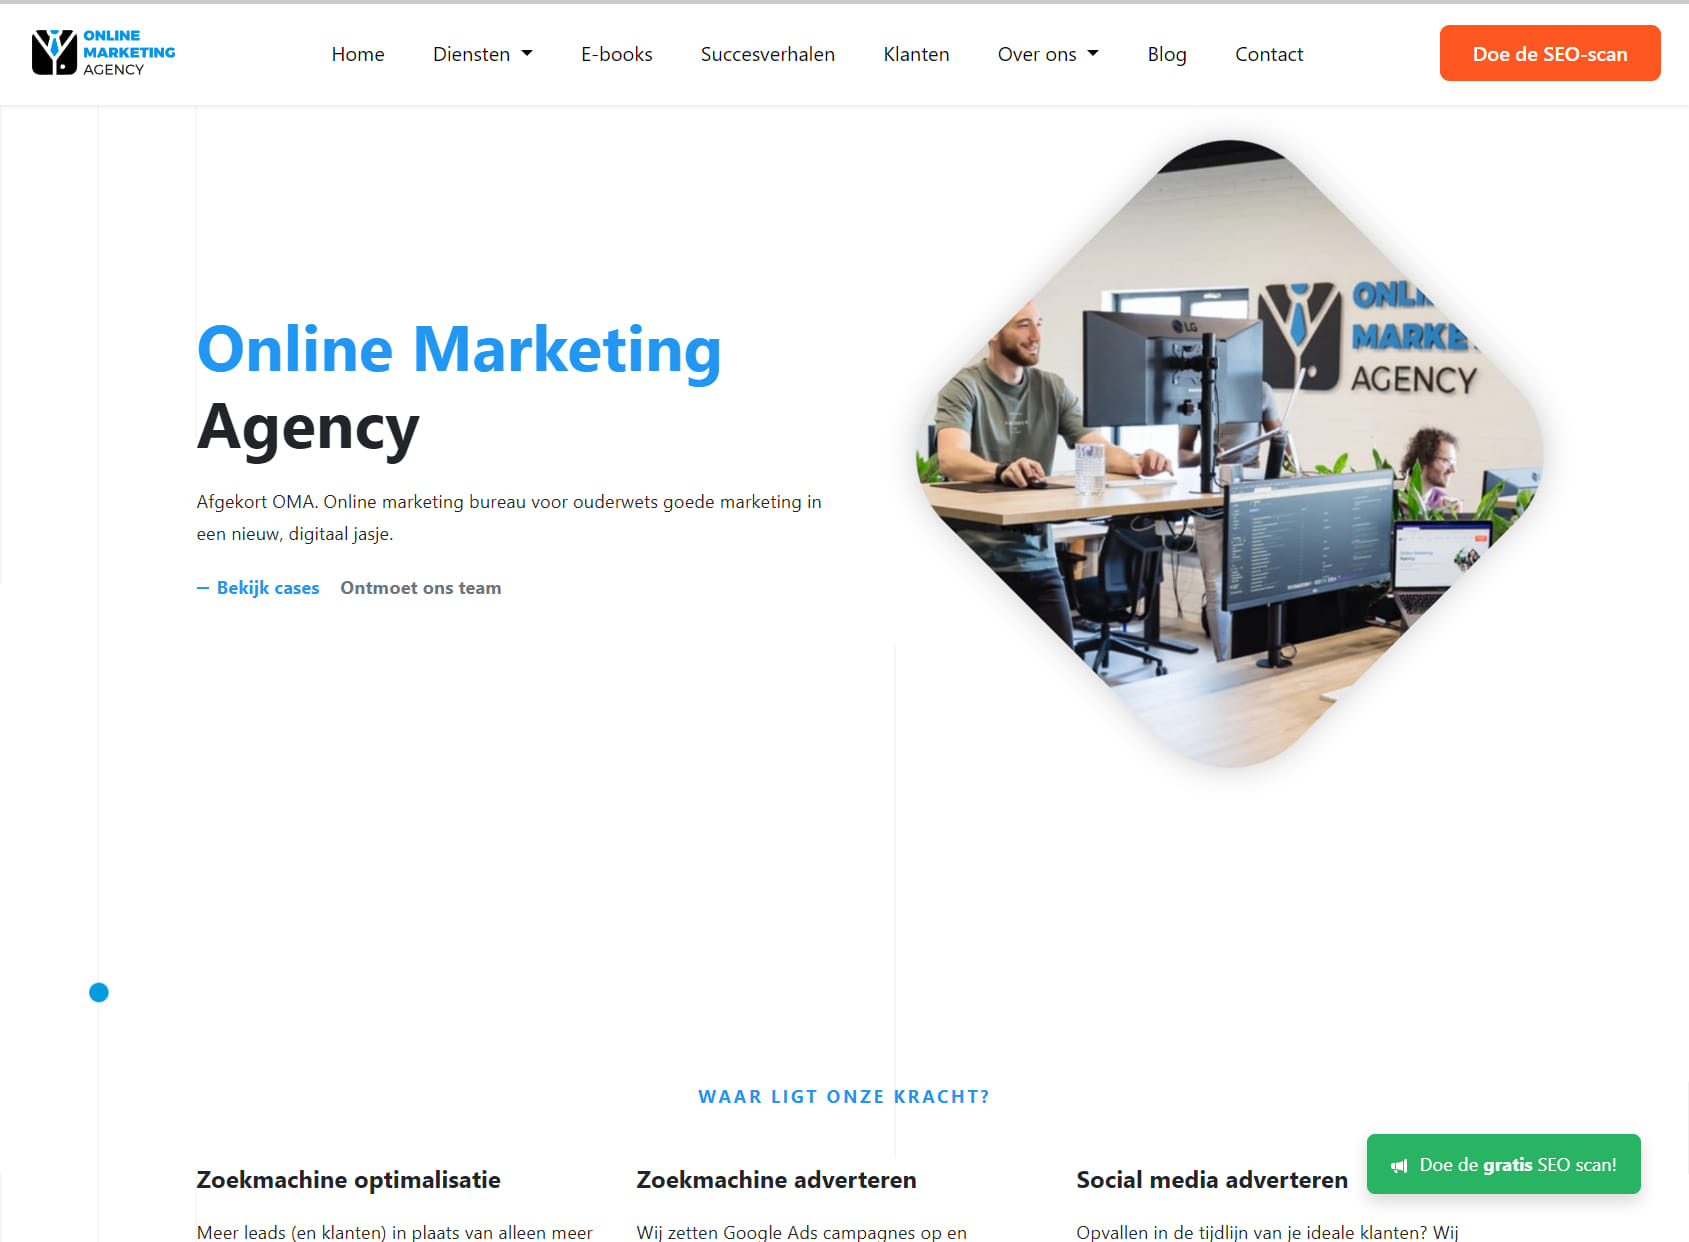 OMA (Online Marketing Agency)